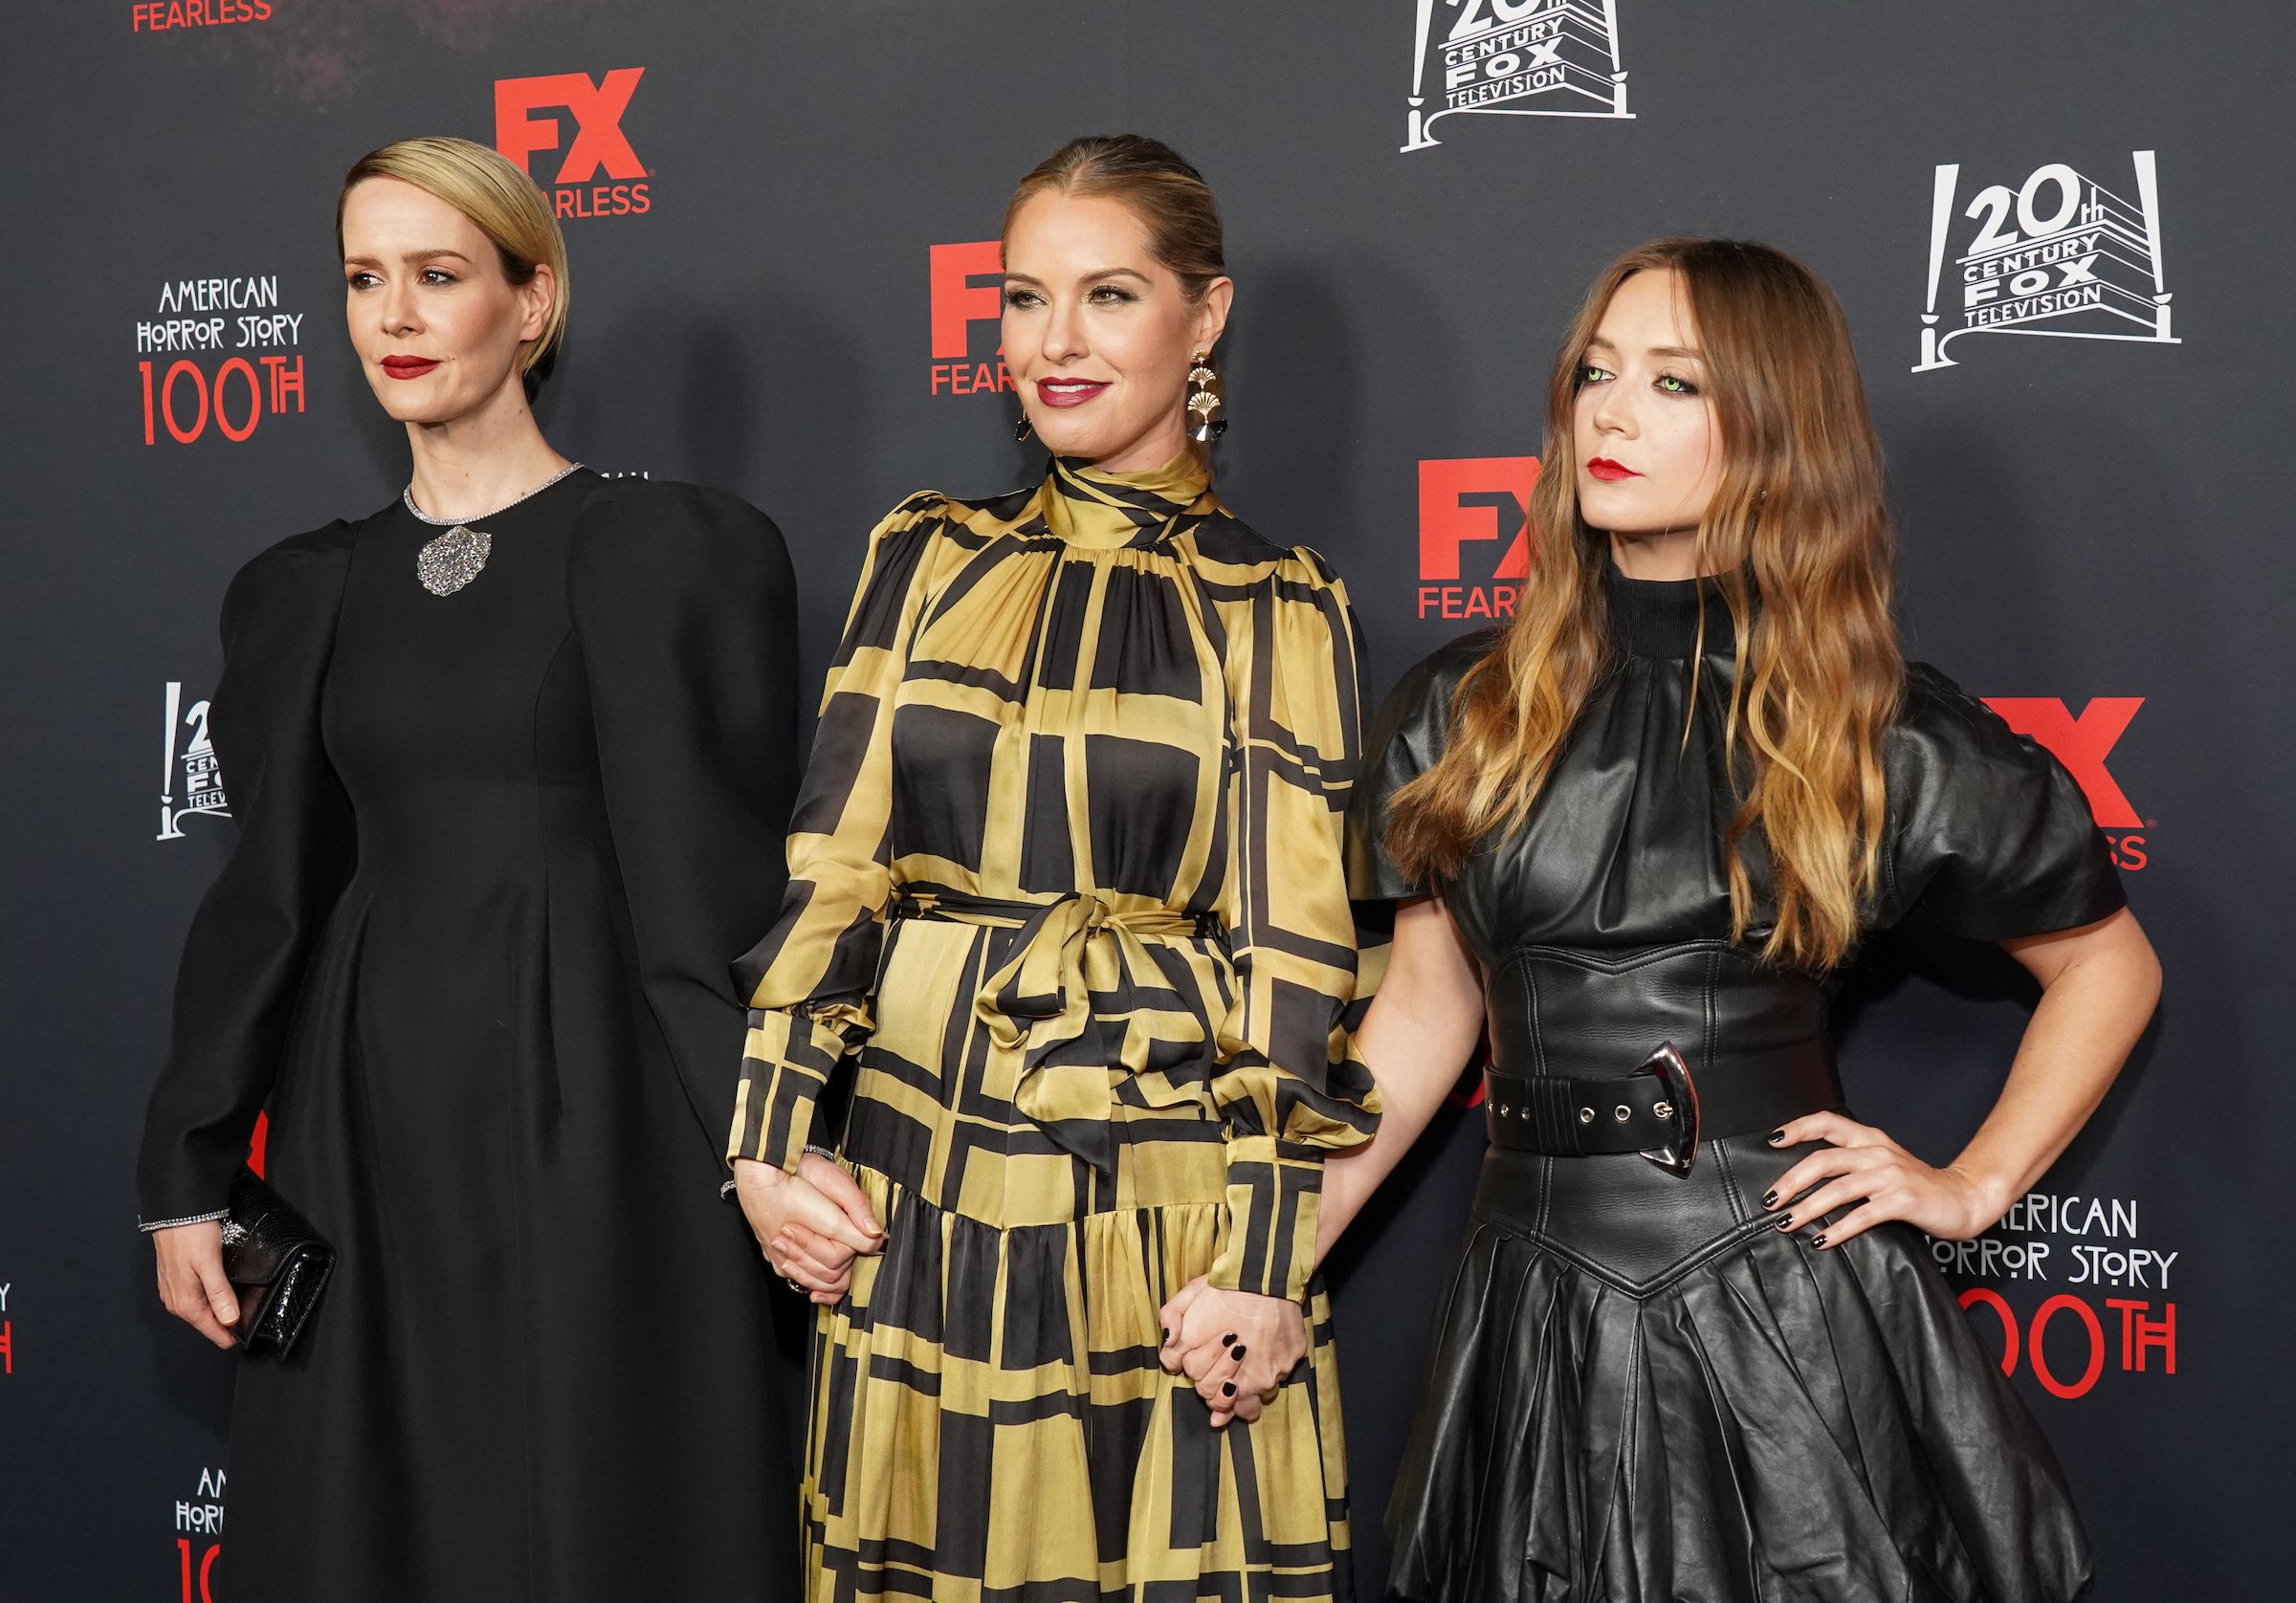 Sarah Paulson, Leslie Grossman, and Billie Lourd attend FX's 'American Horror Story' 100th Episode Celebration